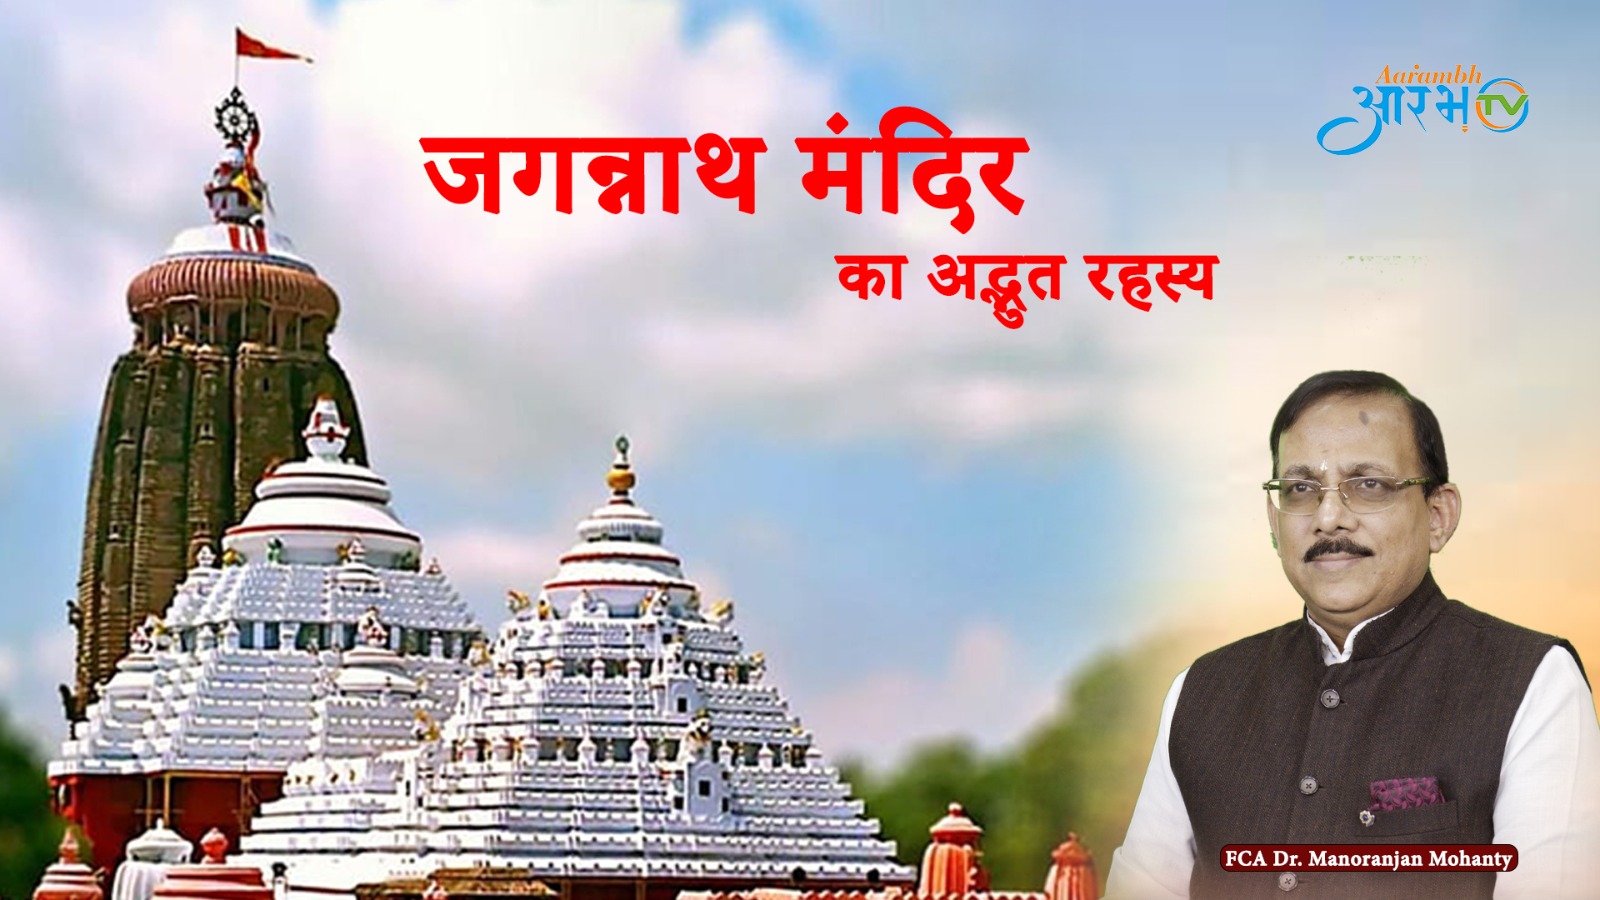 क्या है भगवान जगन्नाथ जी की 10 रहस्य | Watch Complete Video about Lord Jagannath Puri Biggest Mysteries https://youtu.be/VoG-bhaqvqA